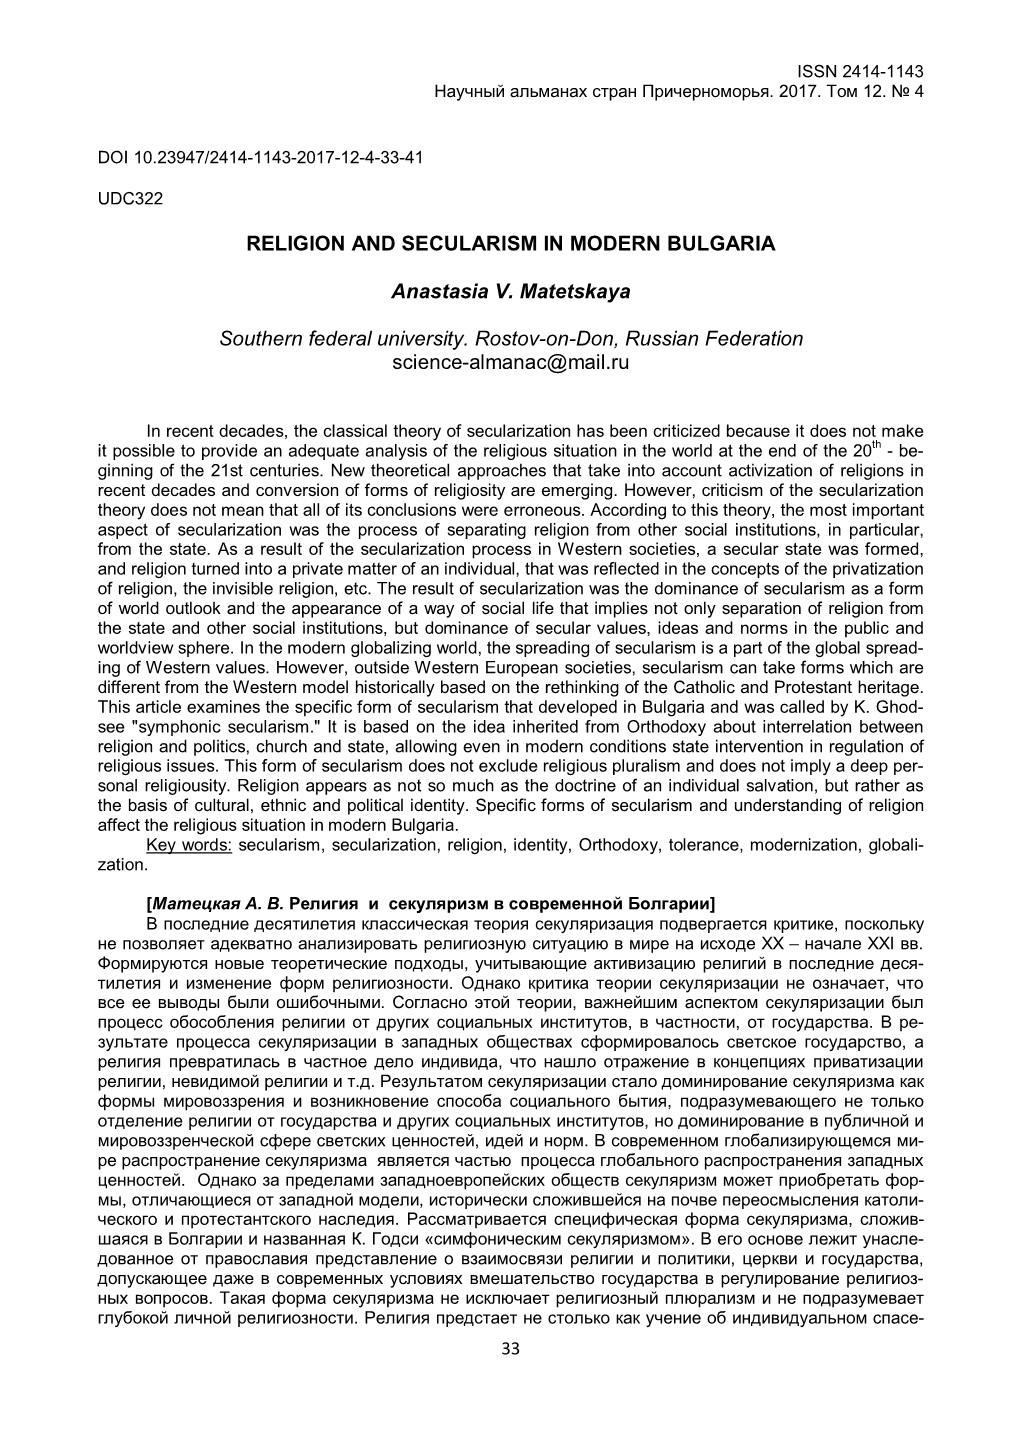 RELIGION and SECULARISM in MODERN BULGARIA Anastasia V